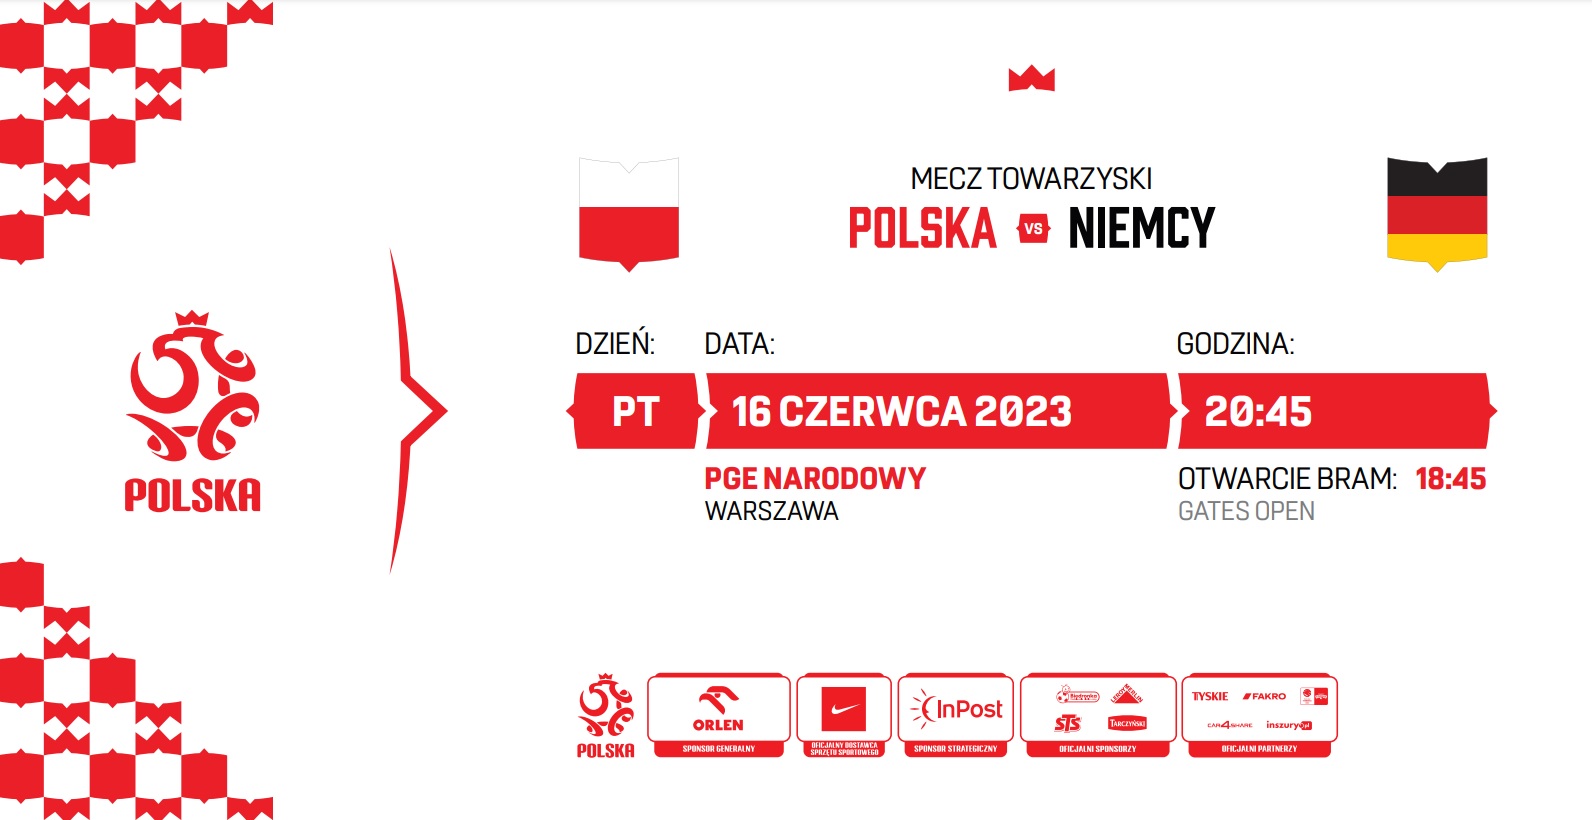 Polska - Niemcy 1:0 (16.06.2023) Bilet print at home